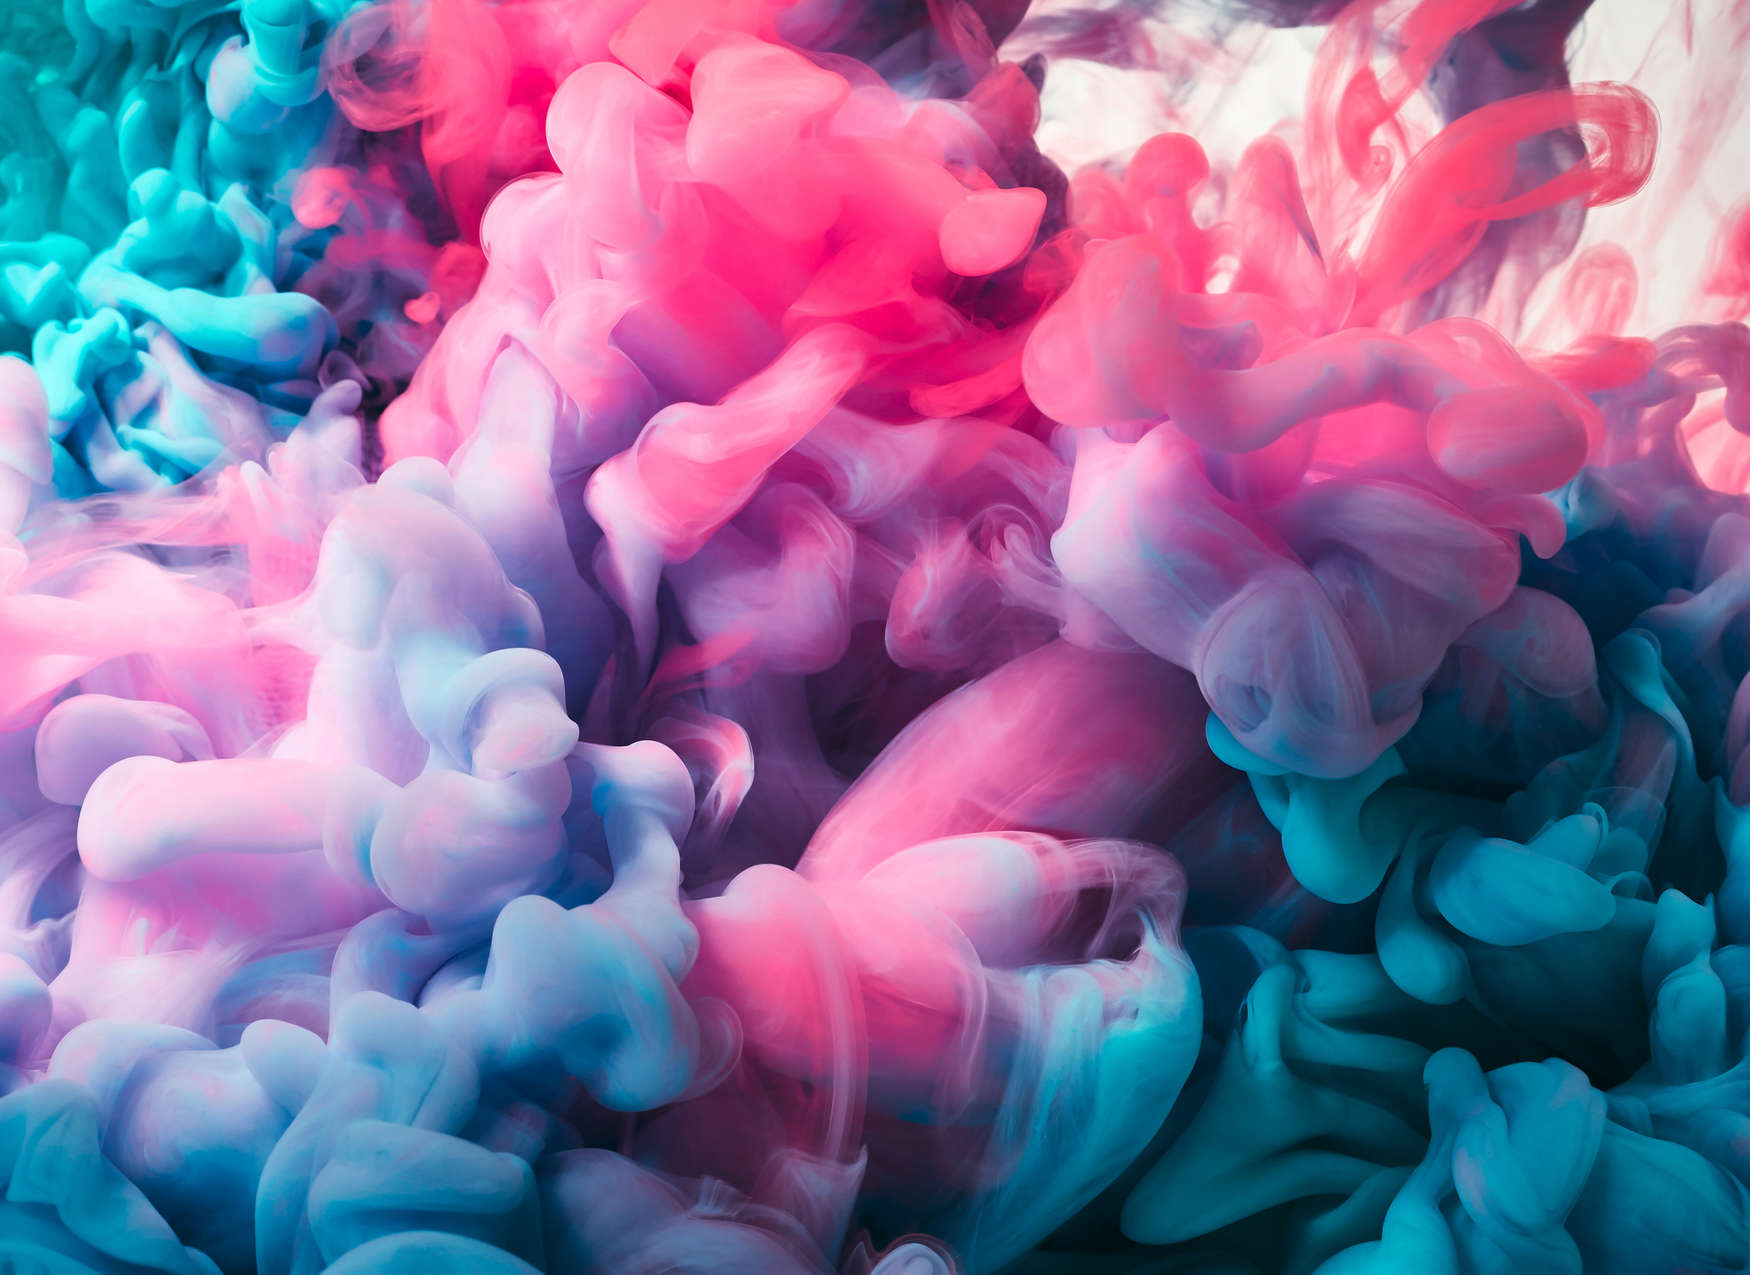             Coloured Smoke Wallpaper - Pink, Blue, White
        